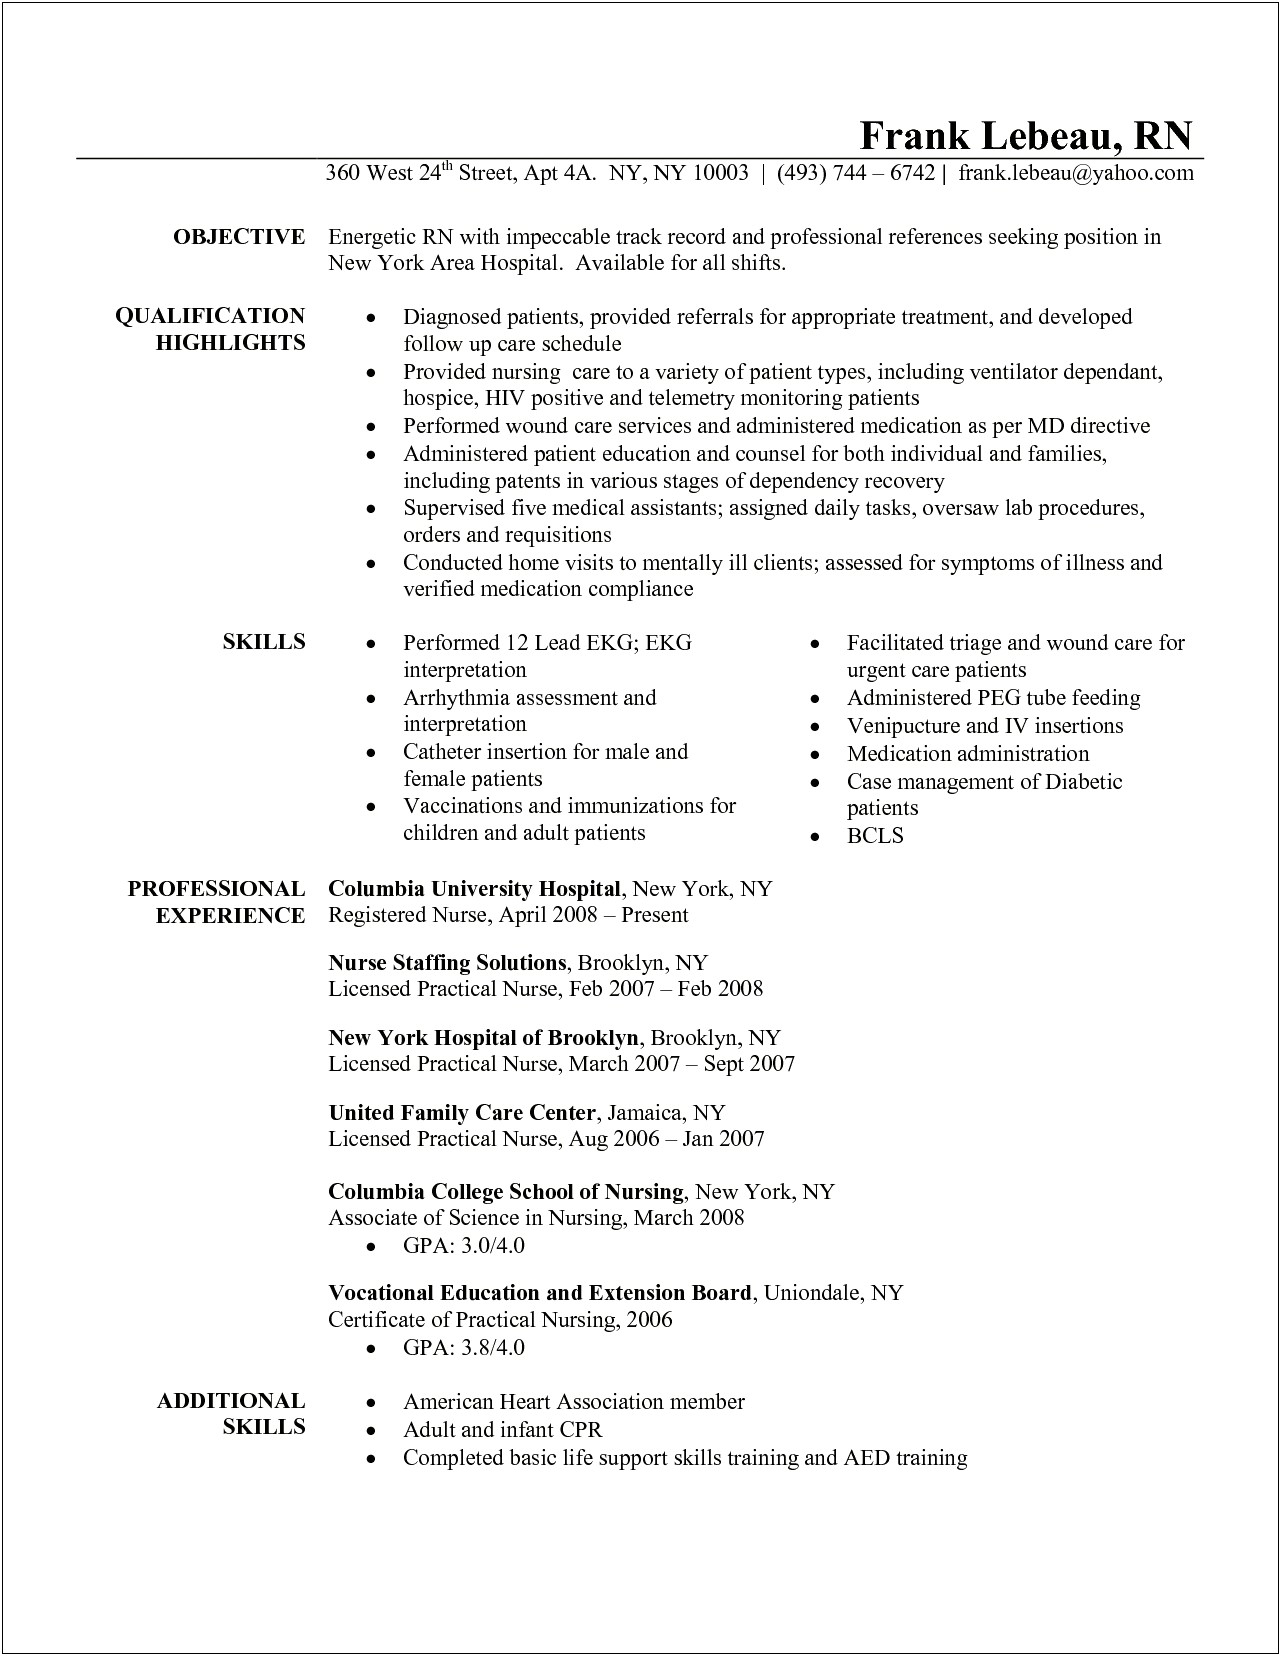 Resume Format For Nursing Job